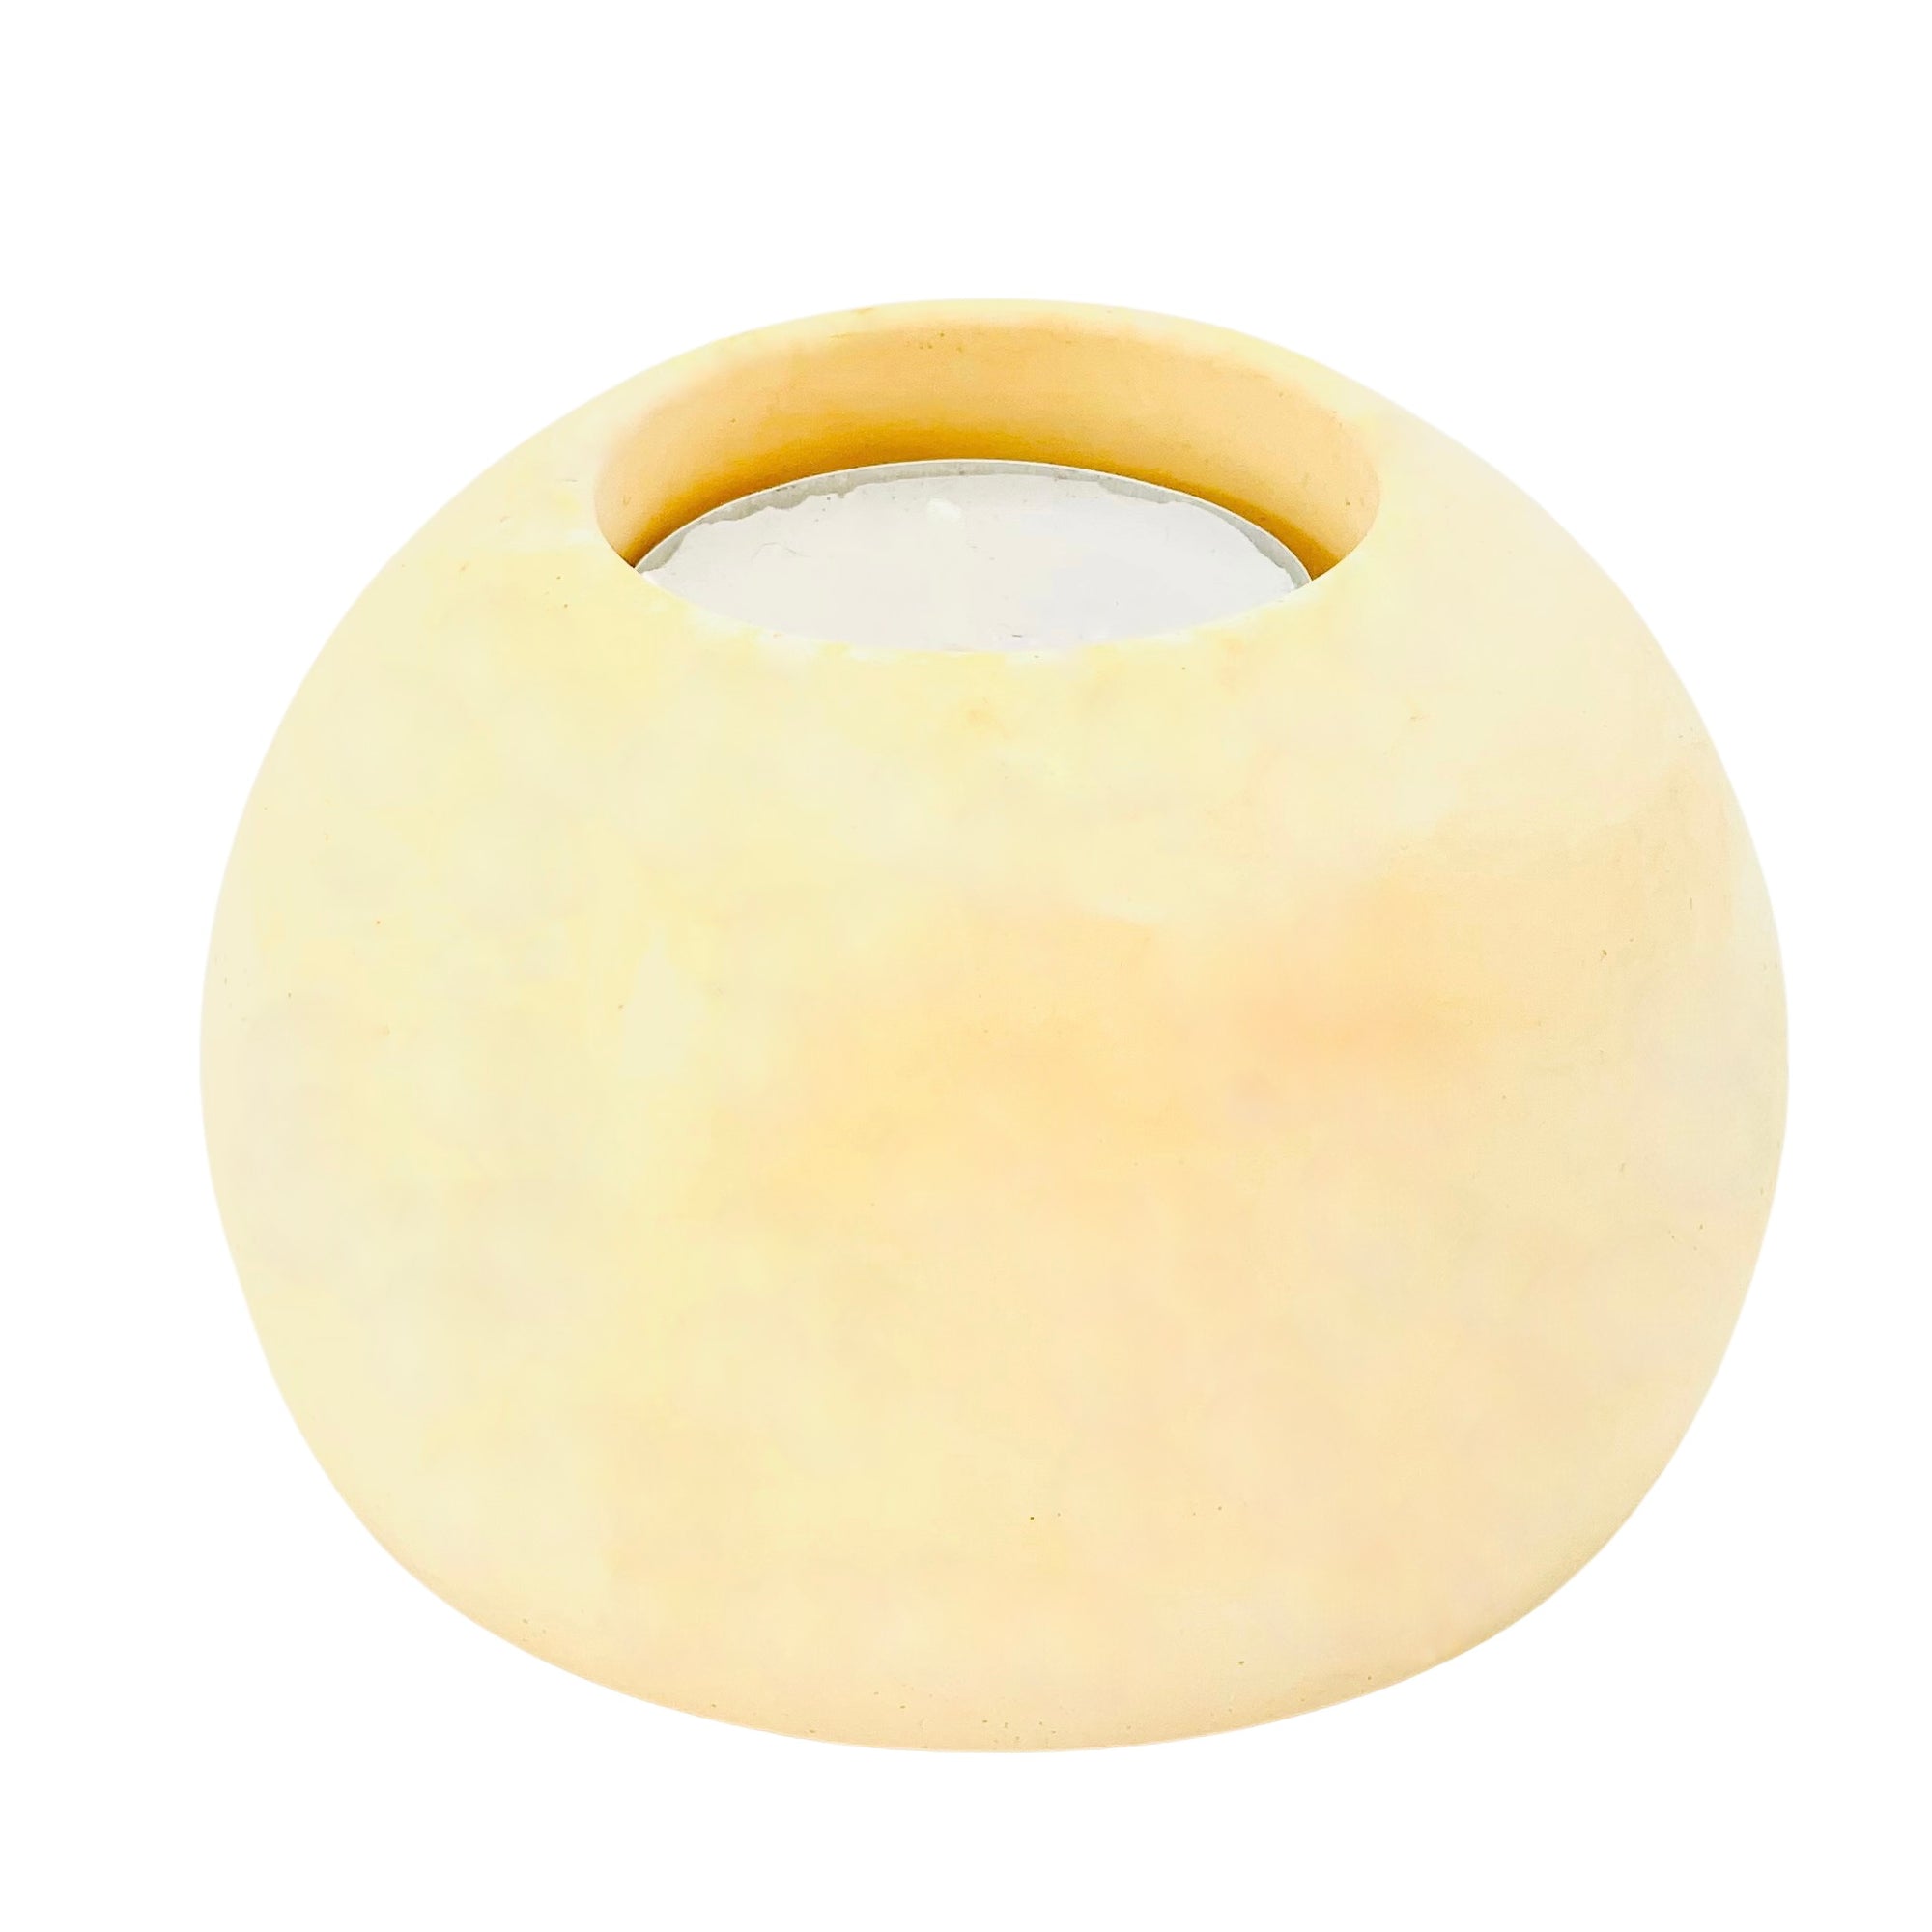 A solid Jesmonite spherical tealight holder measuring 9.2cm in diameter marbled with peach pigment.